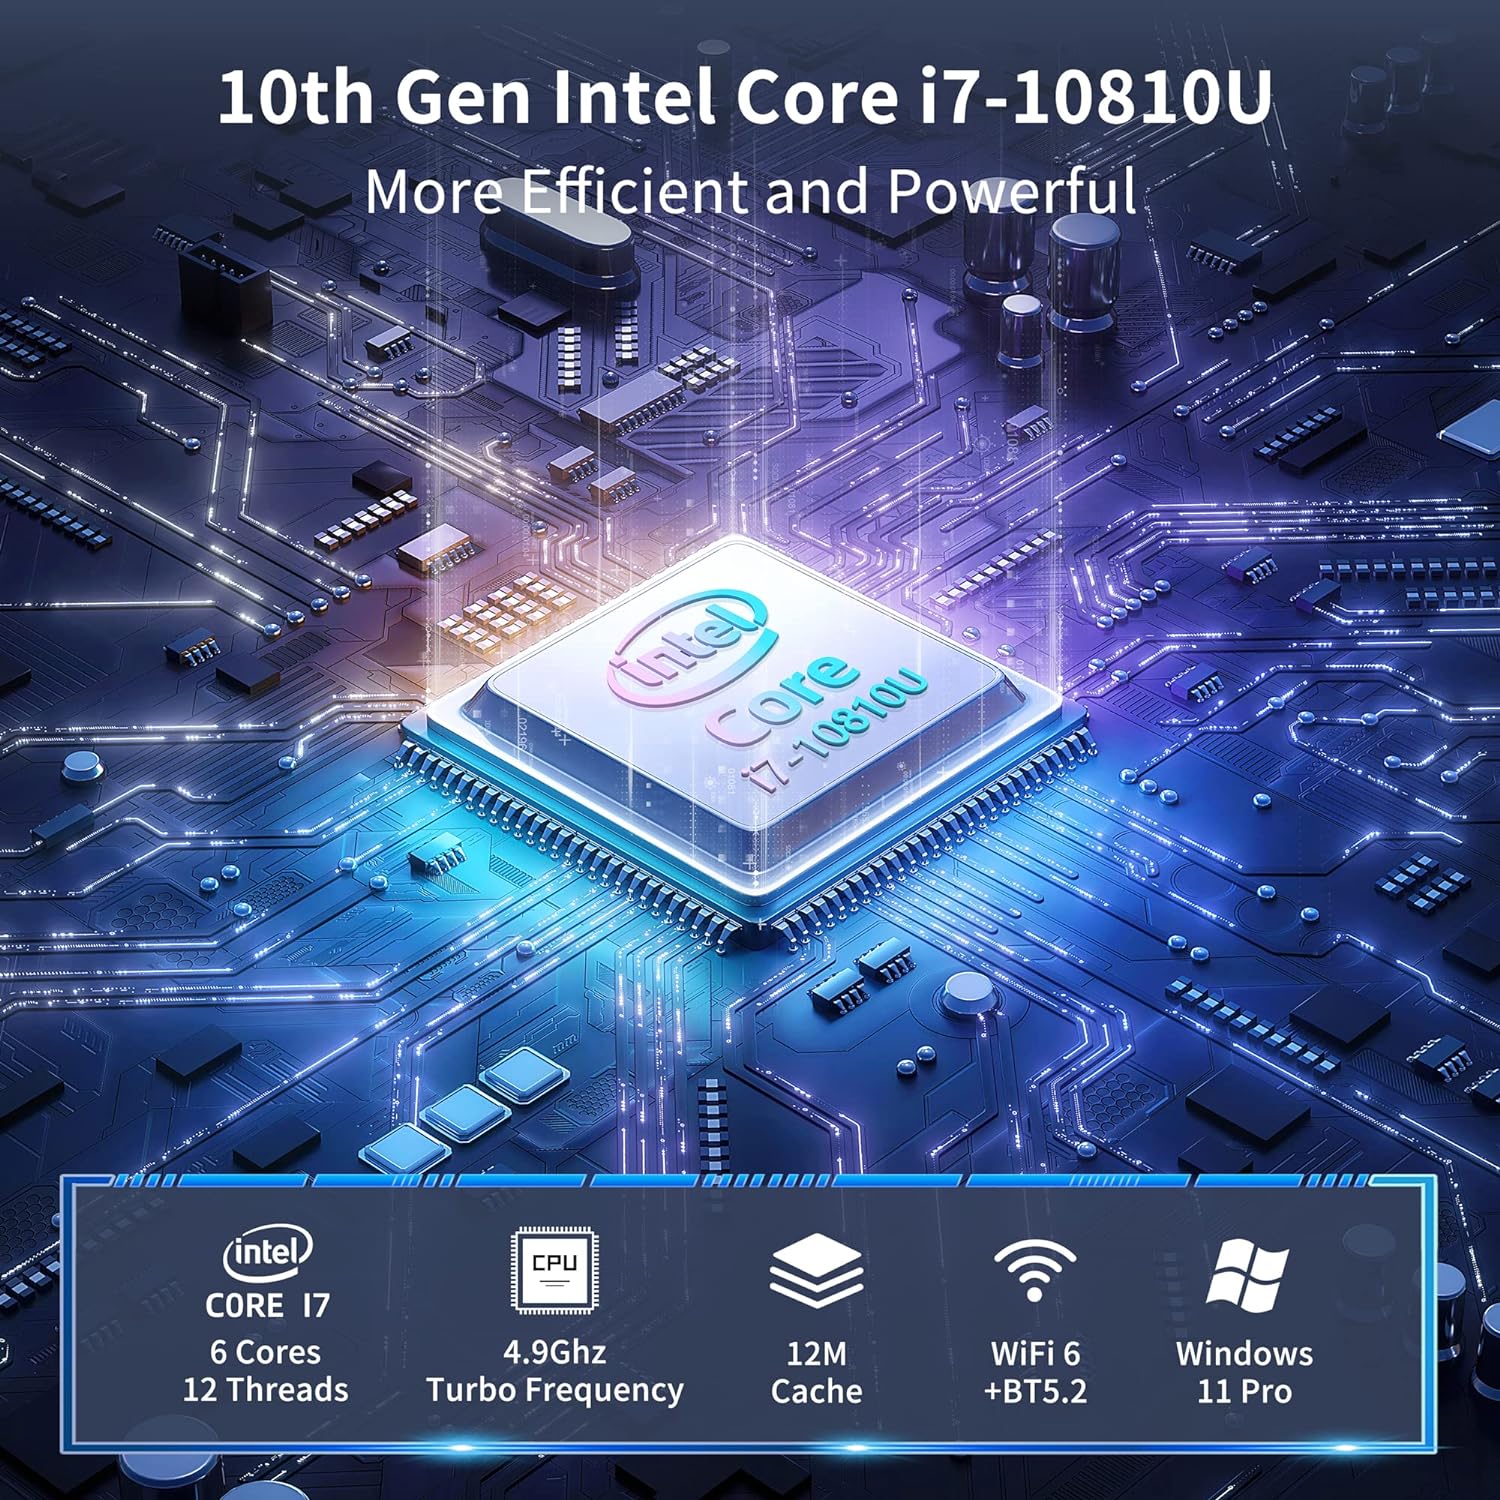 Mini PC, Intel i7-10810U(6 Cores, Turbo 4.9GHz),Mini Desktop Computer for Business,Gaming,16GB DDR4 512GB SSD(Max 64GB, 8TB),4K Triple Display,WiFi 6,BT5.2 for Office/Study/Home